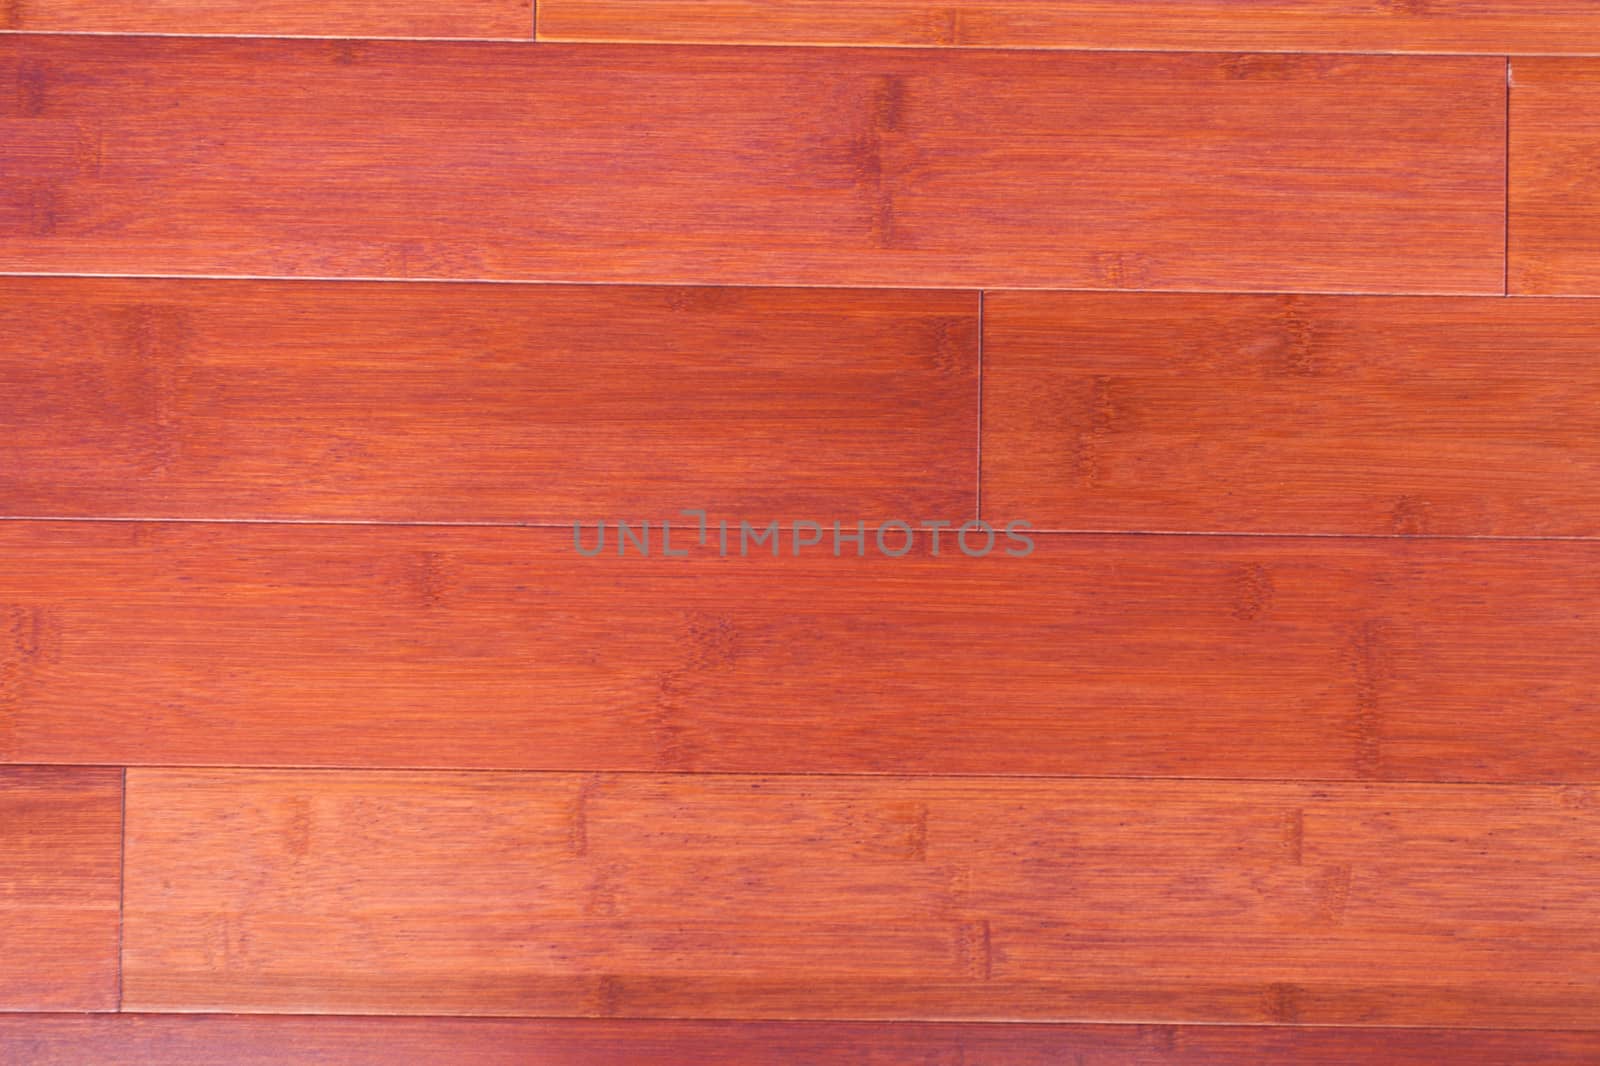 Wooden bamboo flooring grain texture background by PiLens